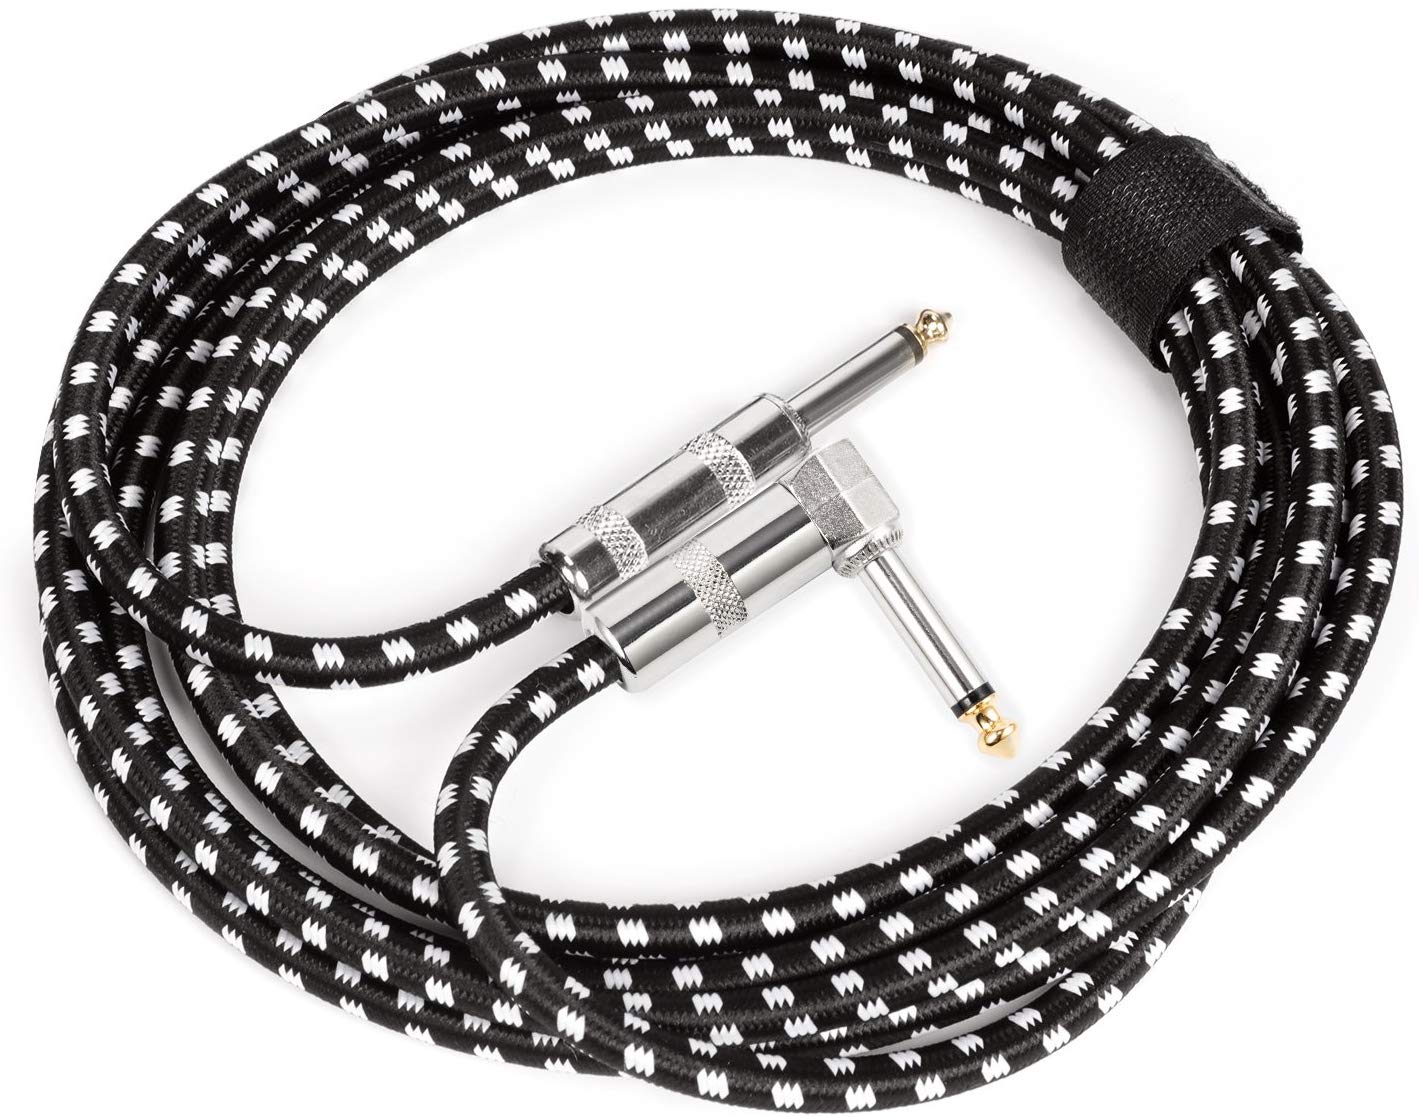 Berkualiti tinggi braided 1m 2m 3m 5m 6.35mm 1/4 trs audio jack muzik instrumen gitar bass aksesori kabel